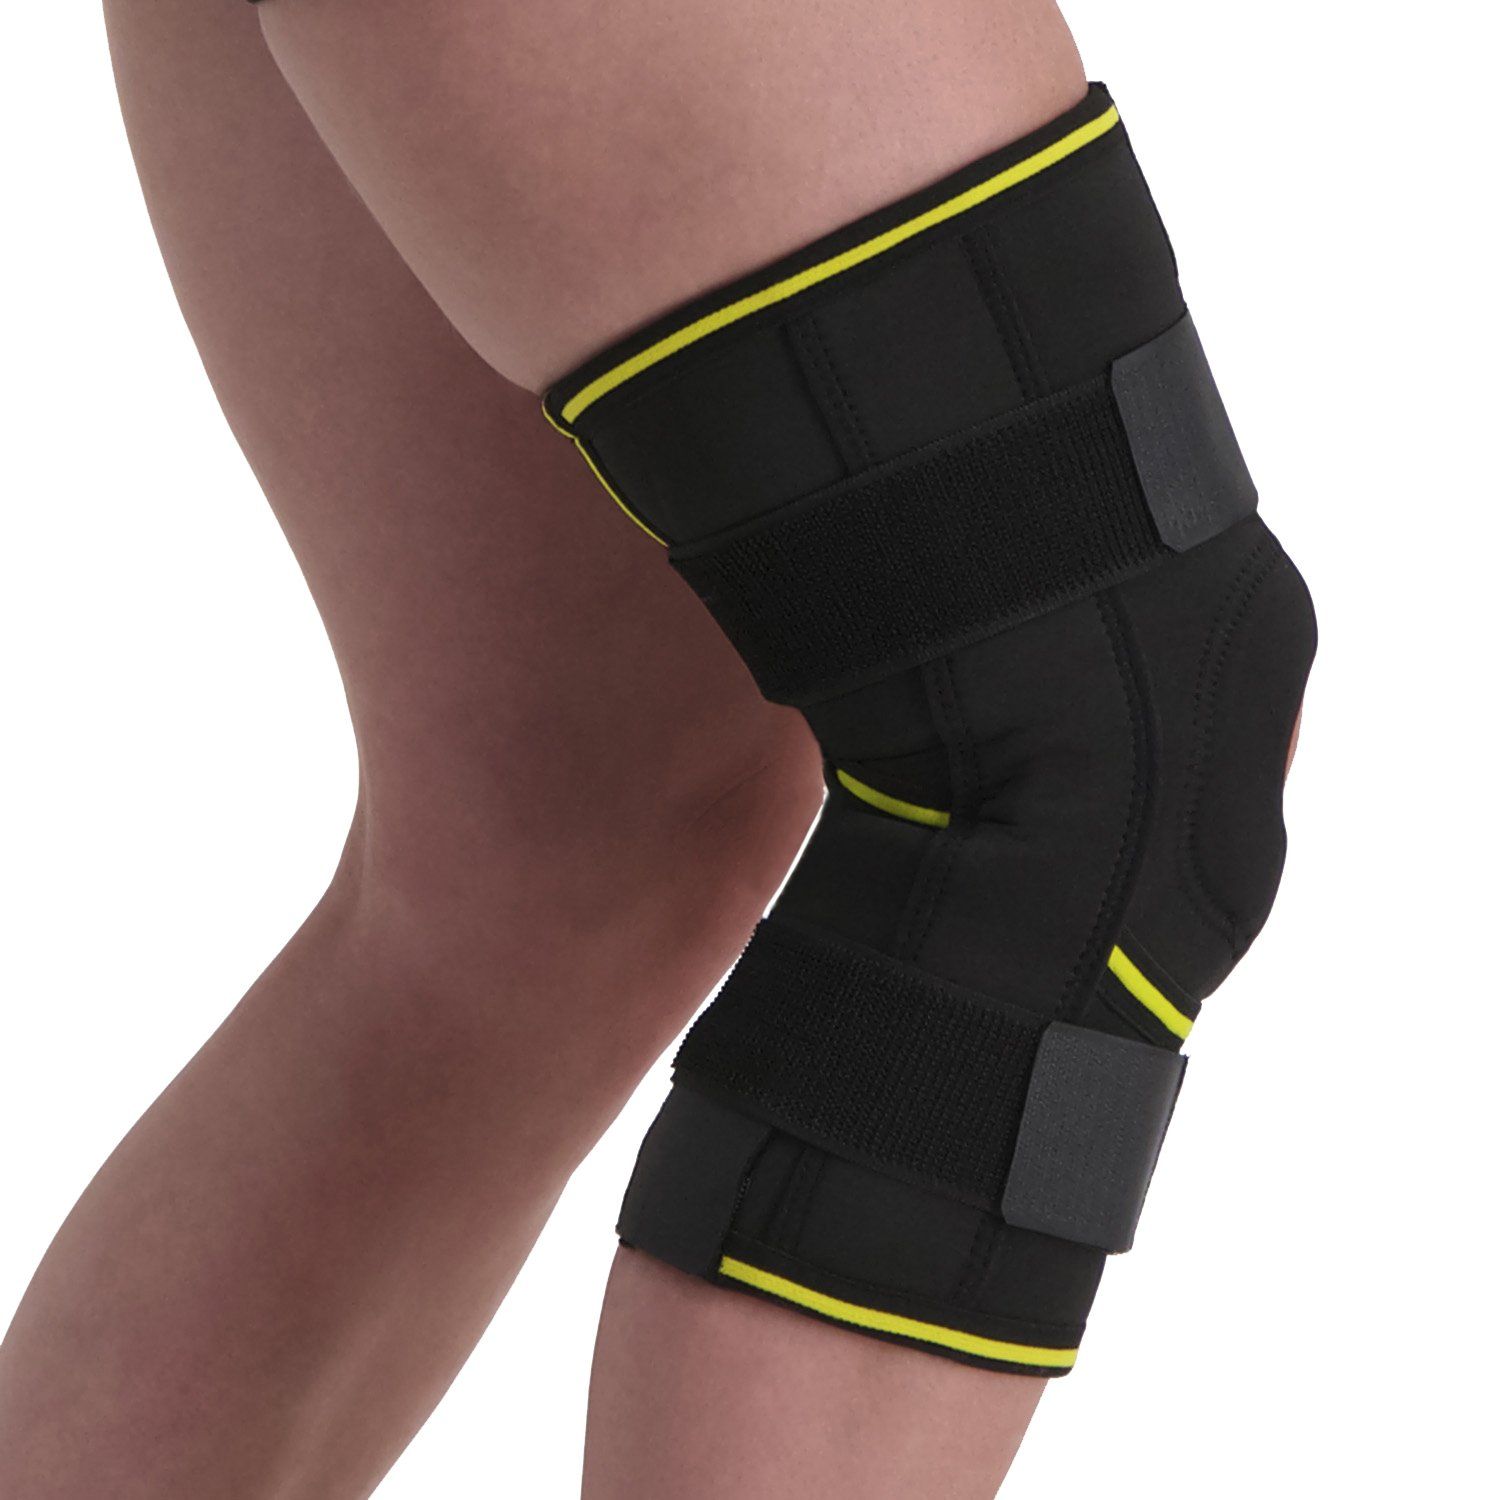 novamed lightweight hinged knee support side view